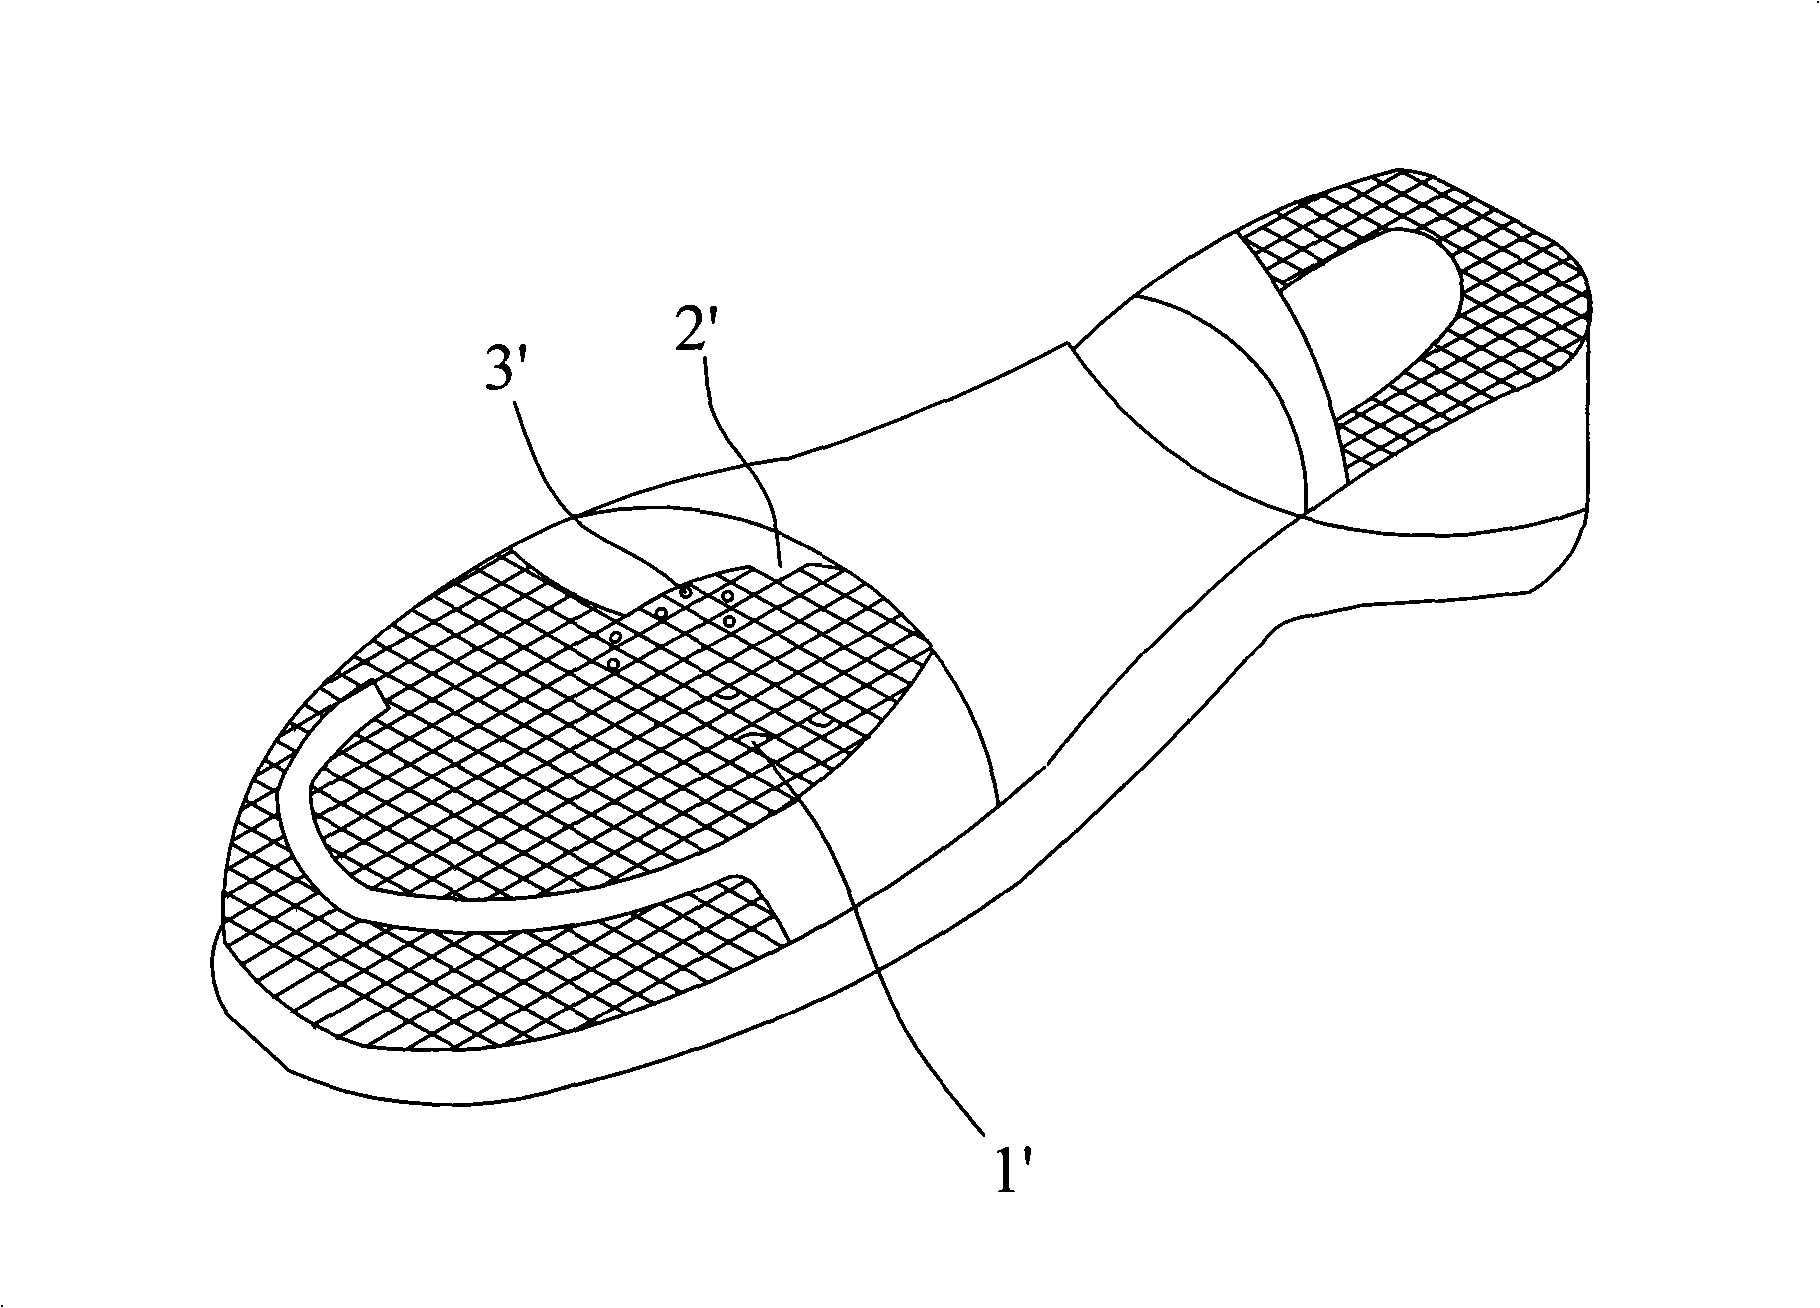 Shoe material processing method